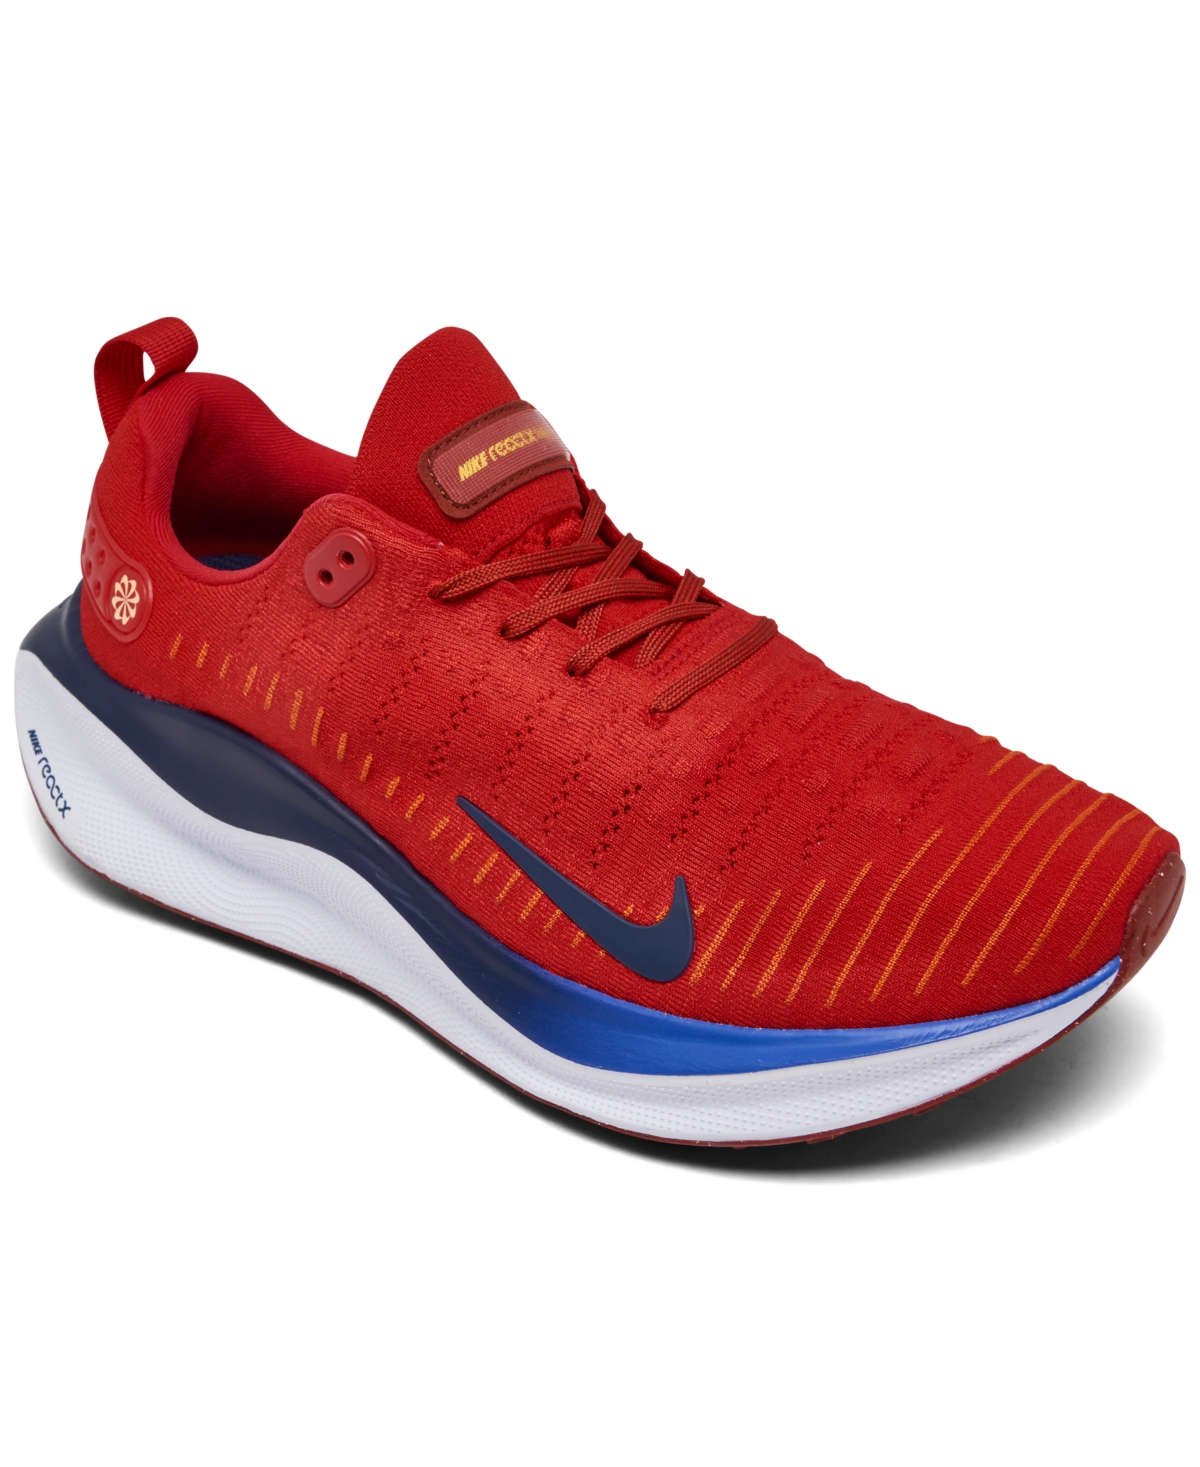 Nike Men's Reactx Infinity Run Rn 4 Wide-width Running Sneakers From Finish Line In University Red,navy